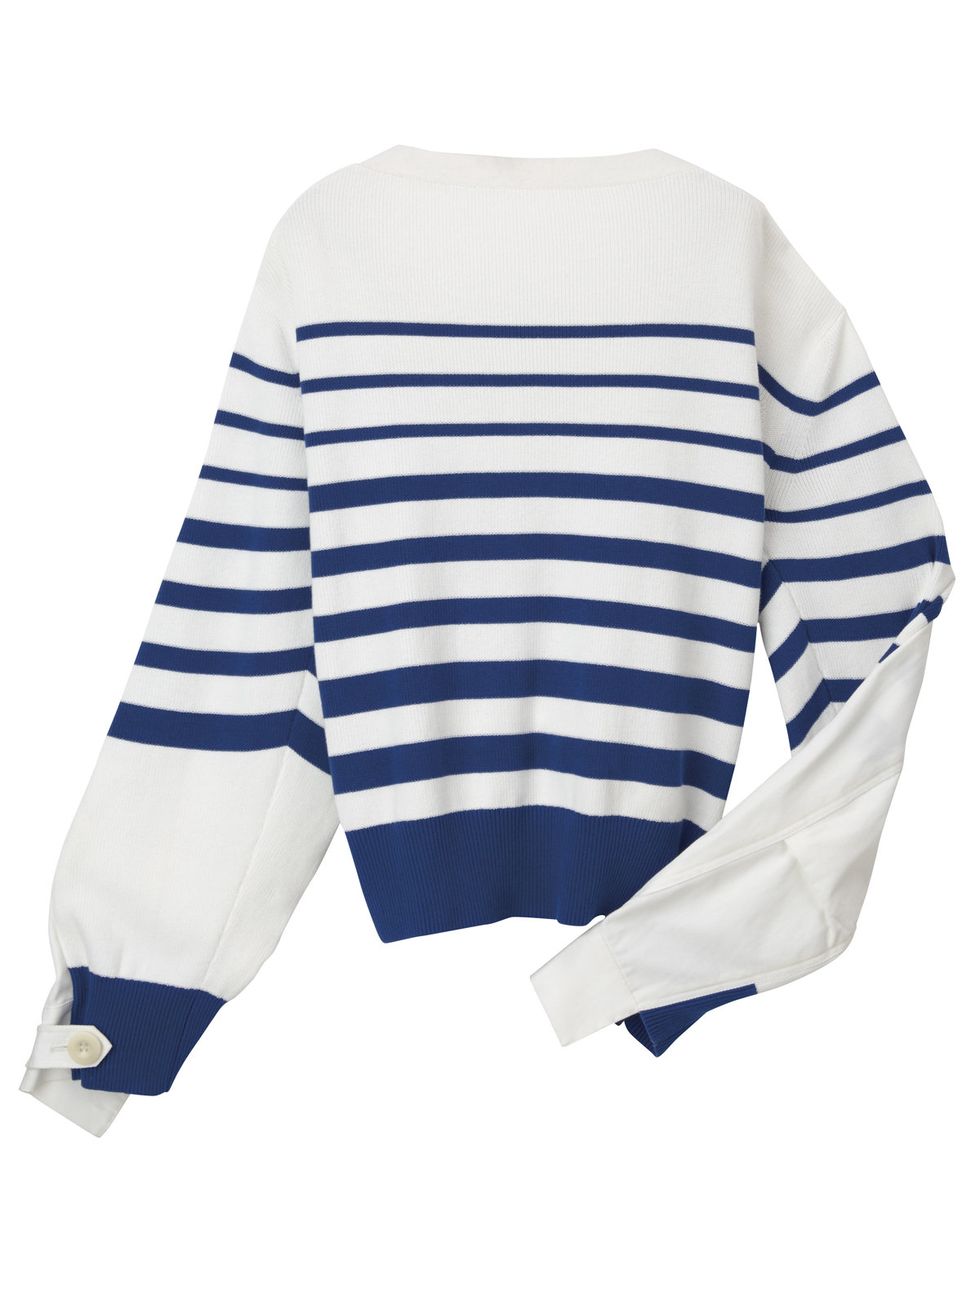 Blue, Product, Sleeve, Sportswear, Textile, White, Collar, Uniform, Jersey, Sweater, 